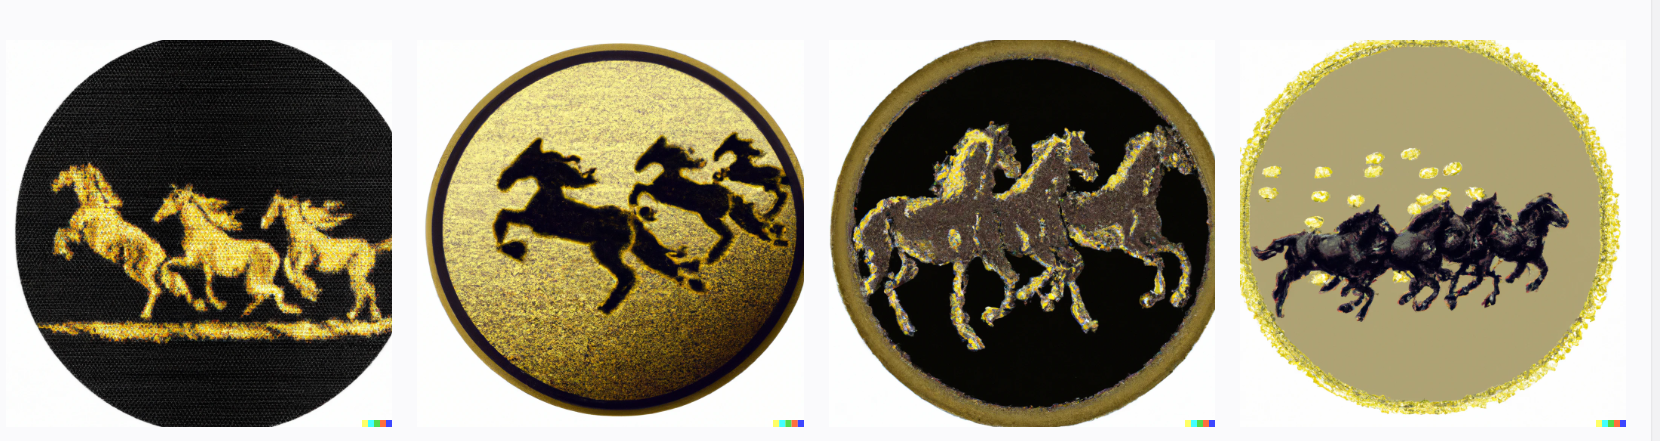 Running black horses stamped on golden golden circle coin, digital art, pixel art